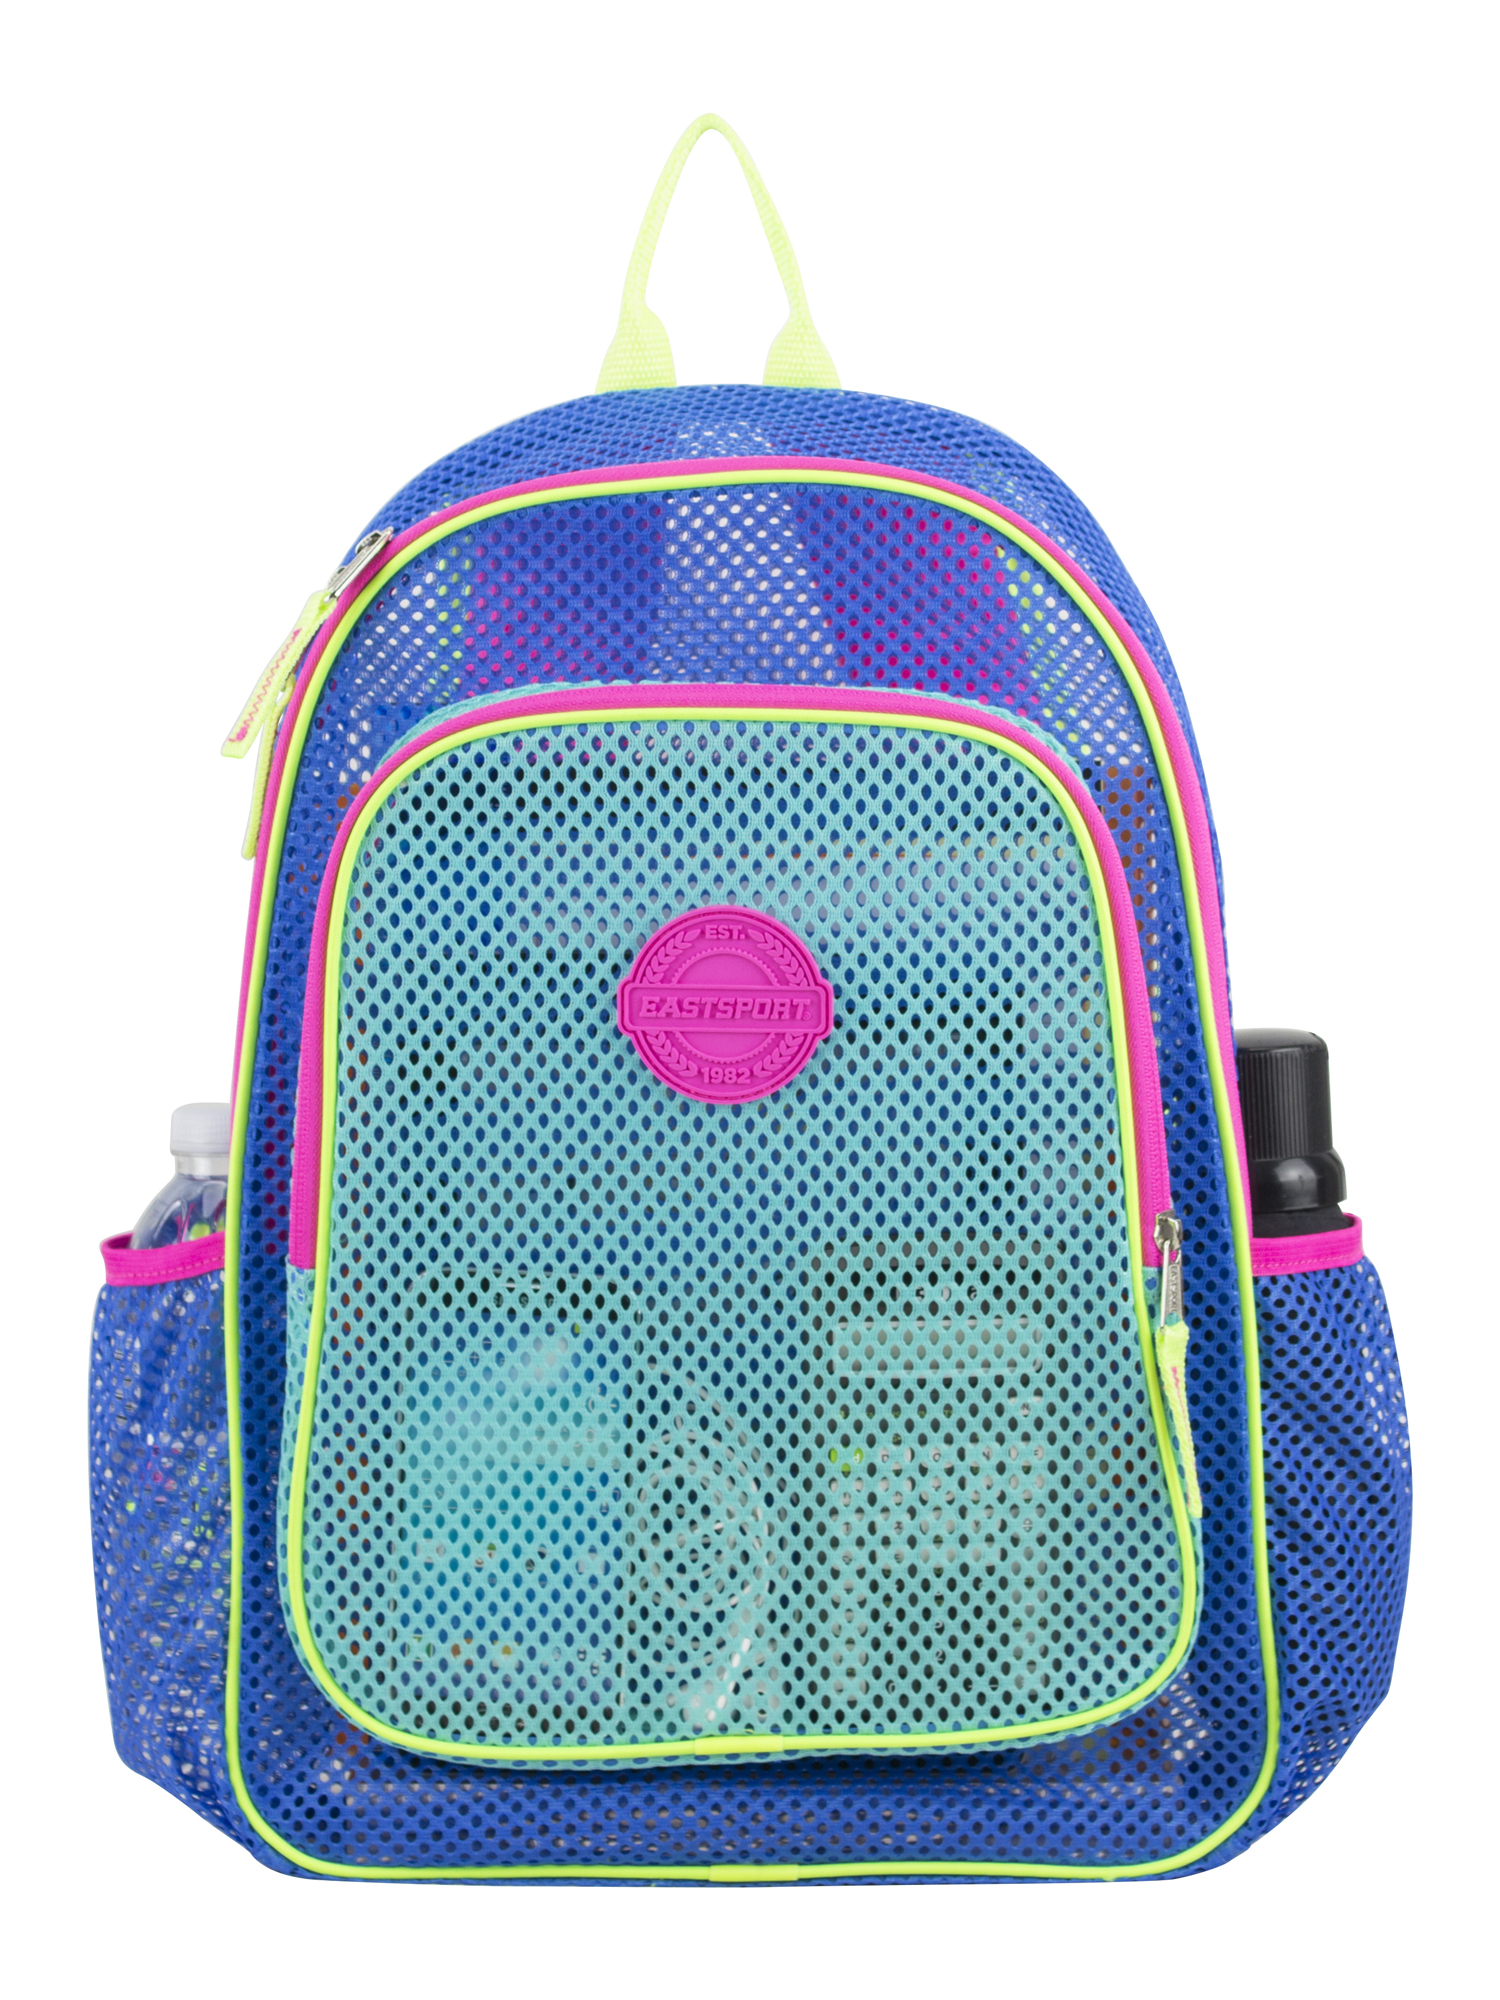 Eastsport Multi-Purpose Mesh Dynamic Blue Backpack with Adjustable Straps - image 2 of 6